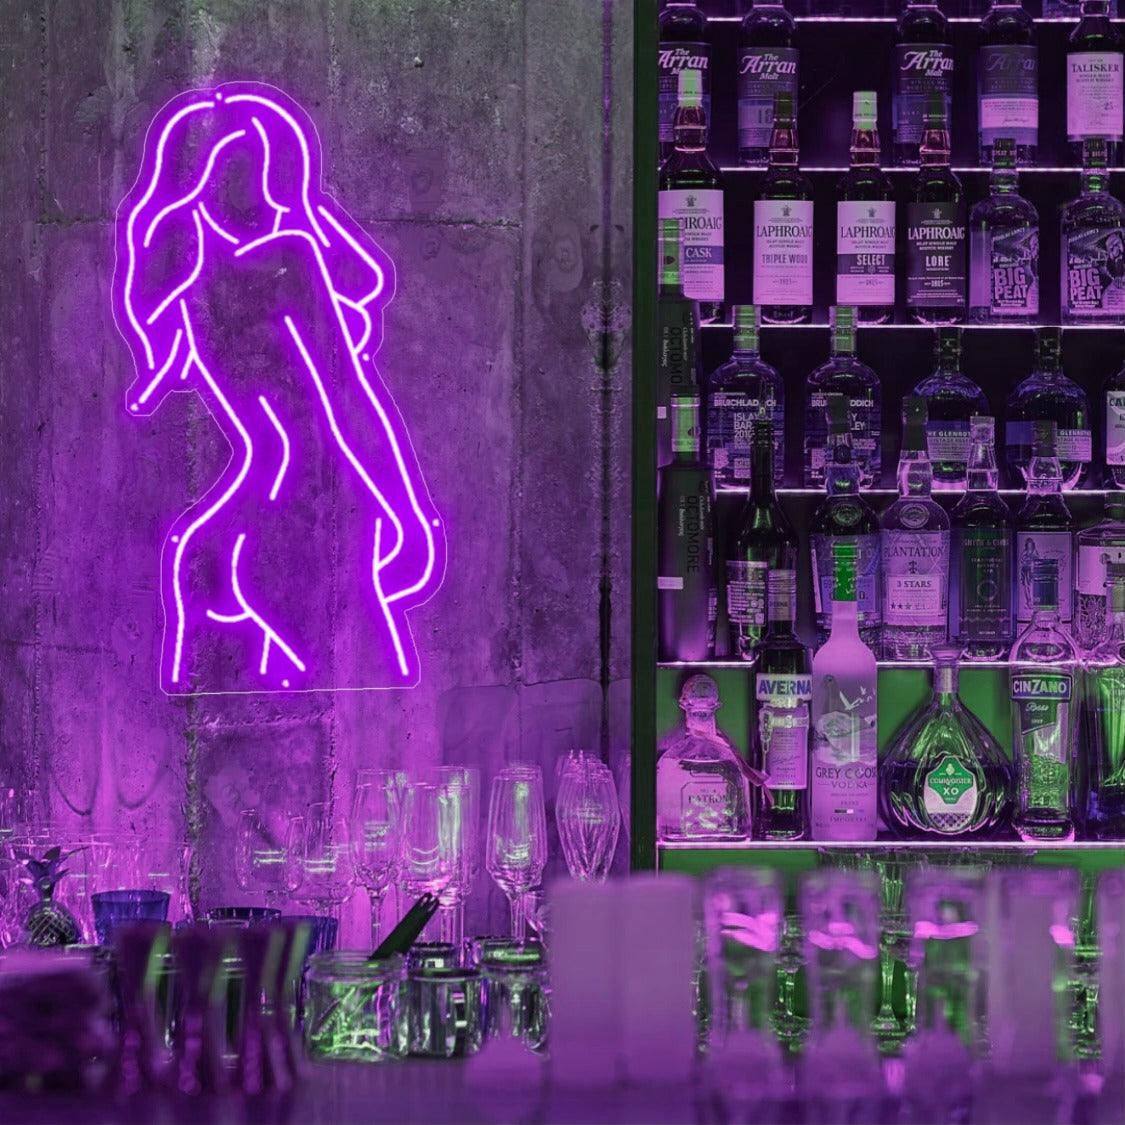 'Female Pose' LED Neon Sign